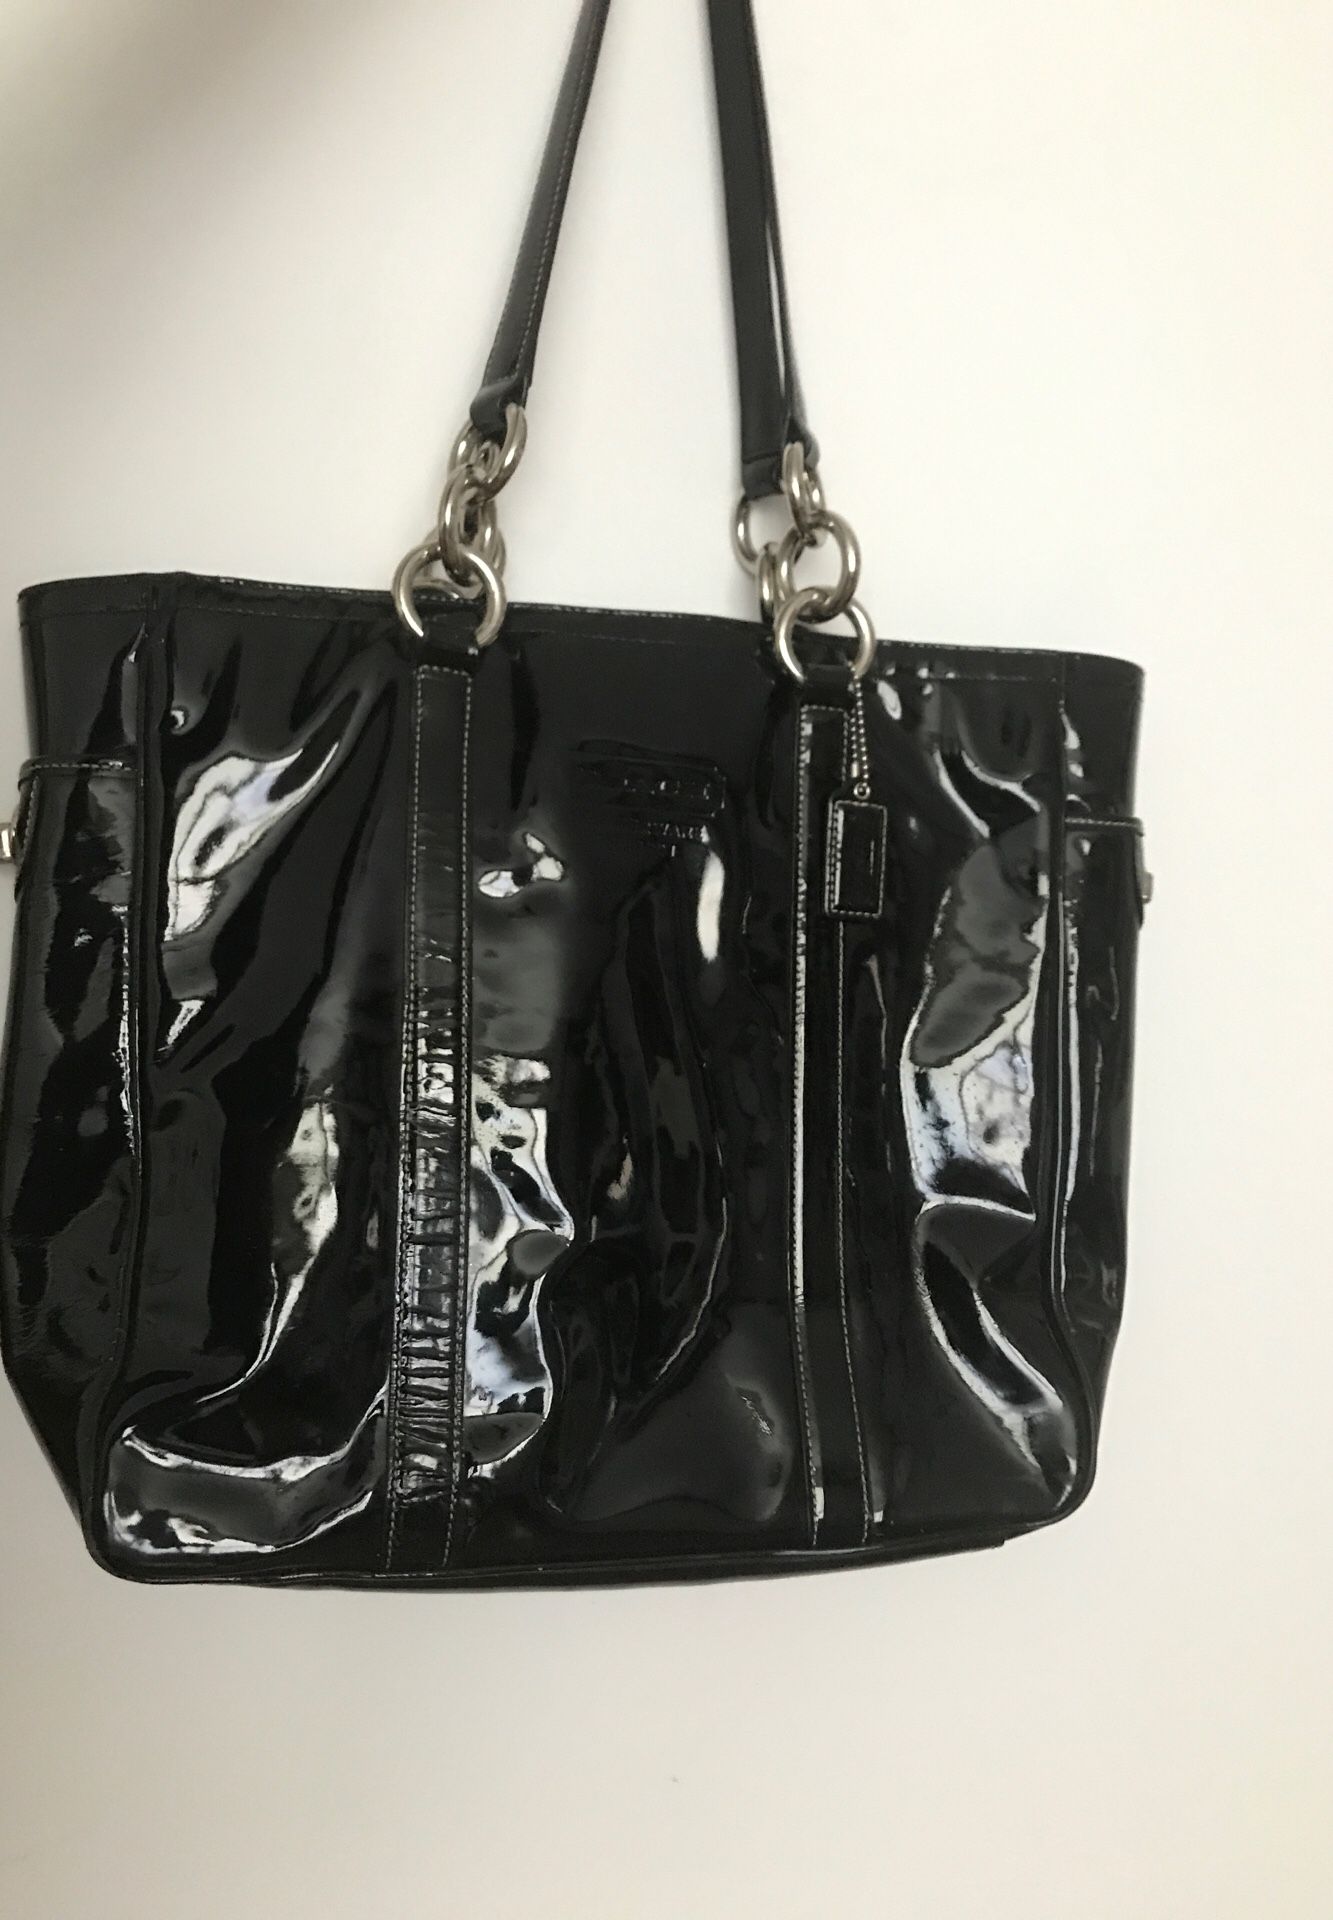 Black patent leather coach bag